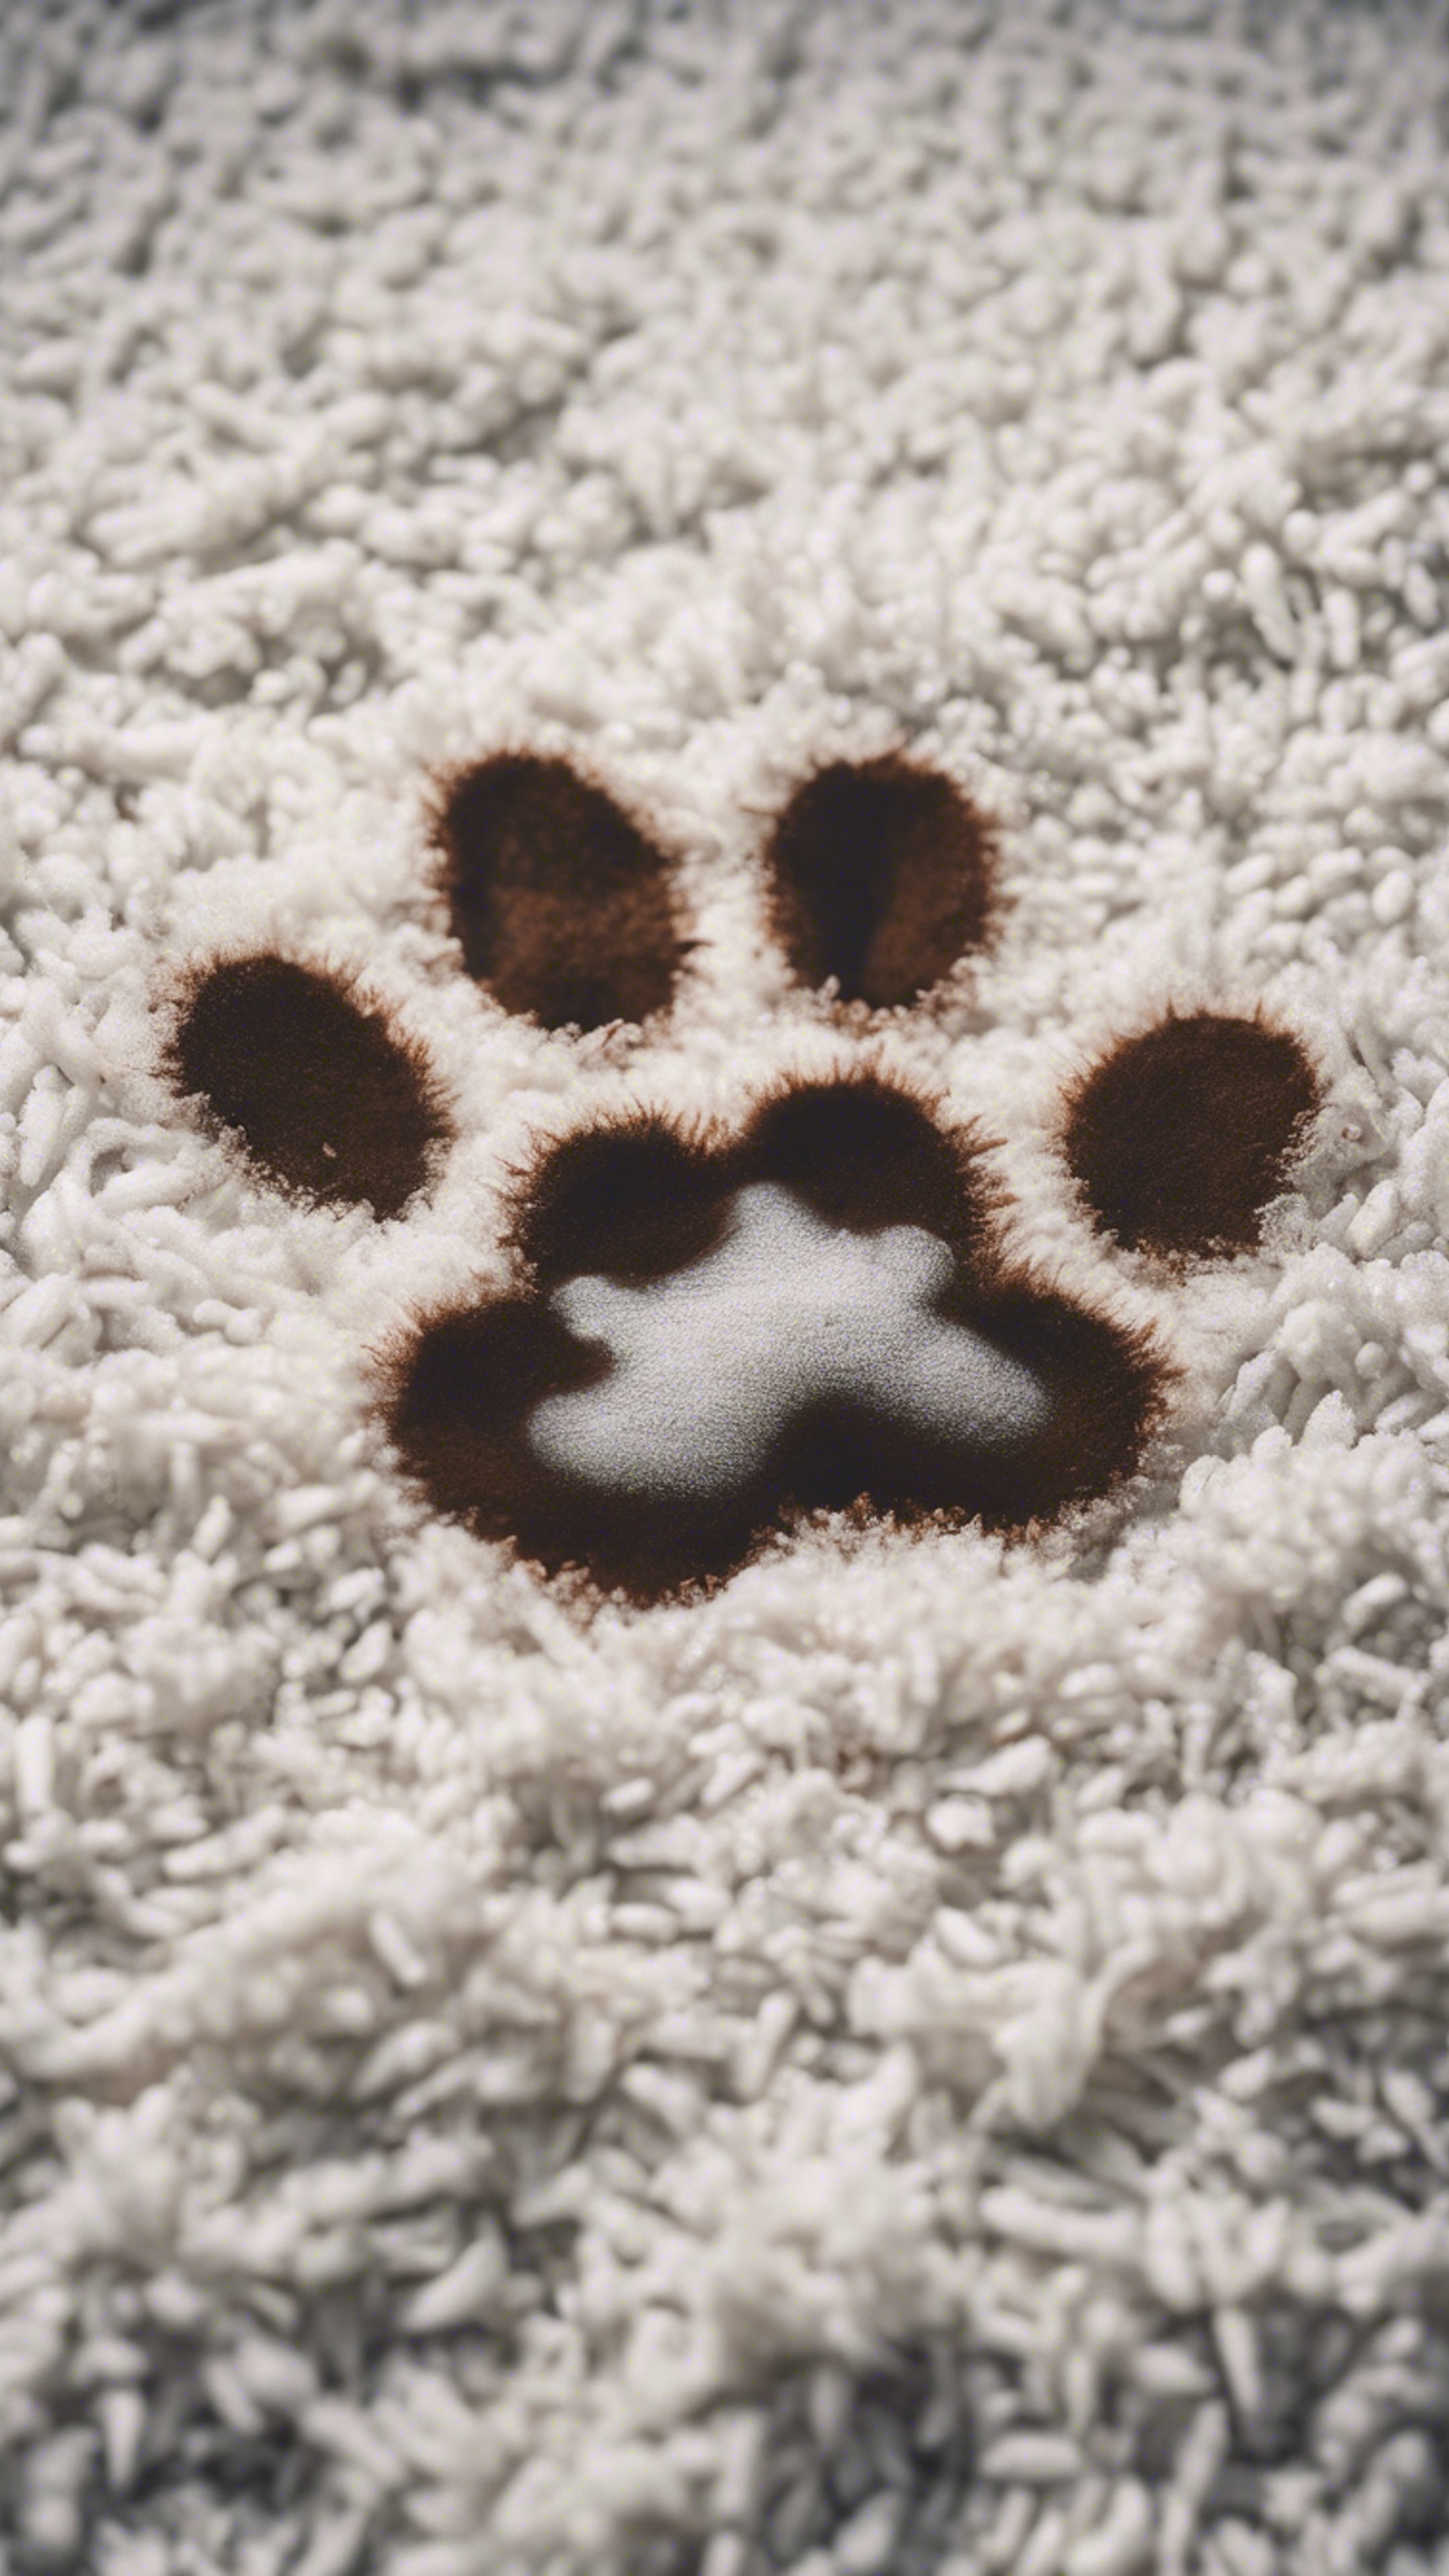 A dirty dog's paw print on an immaculate white carpet.壁紙[4e2fcef8566f4bba9812]